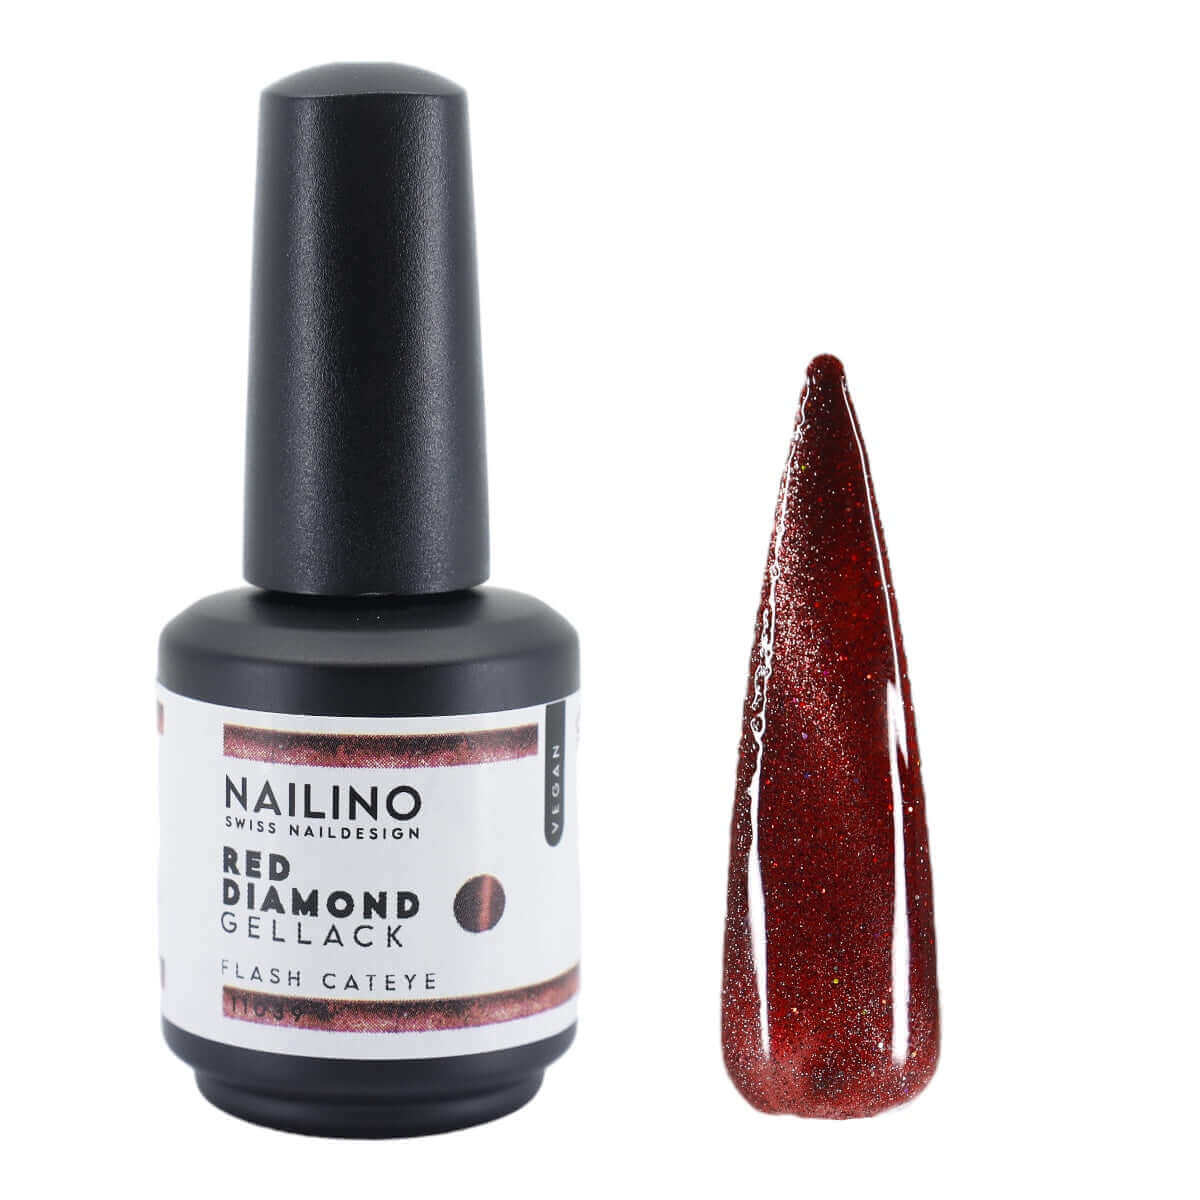 NAILINO Shellac Red Diamond Gellack